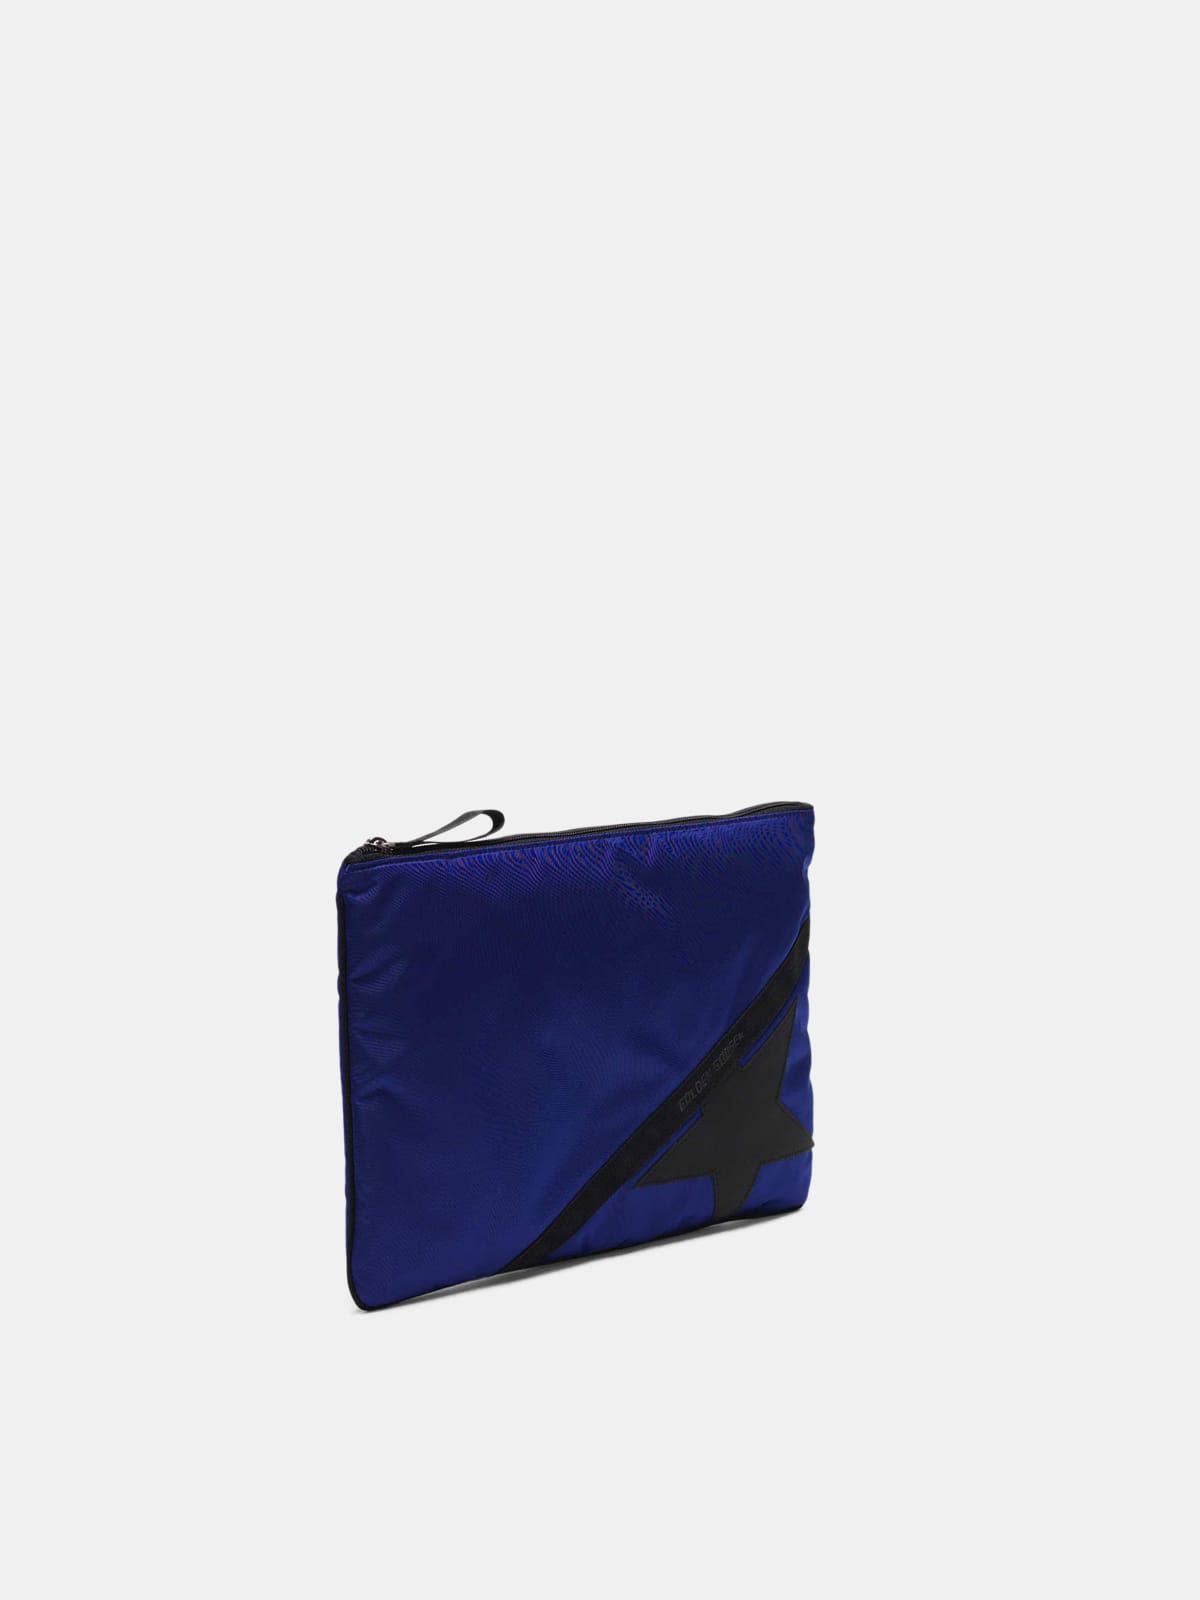 Large royal blue nylon Journey pouch